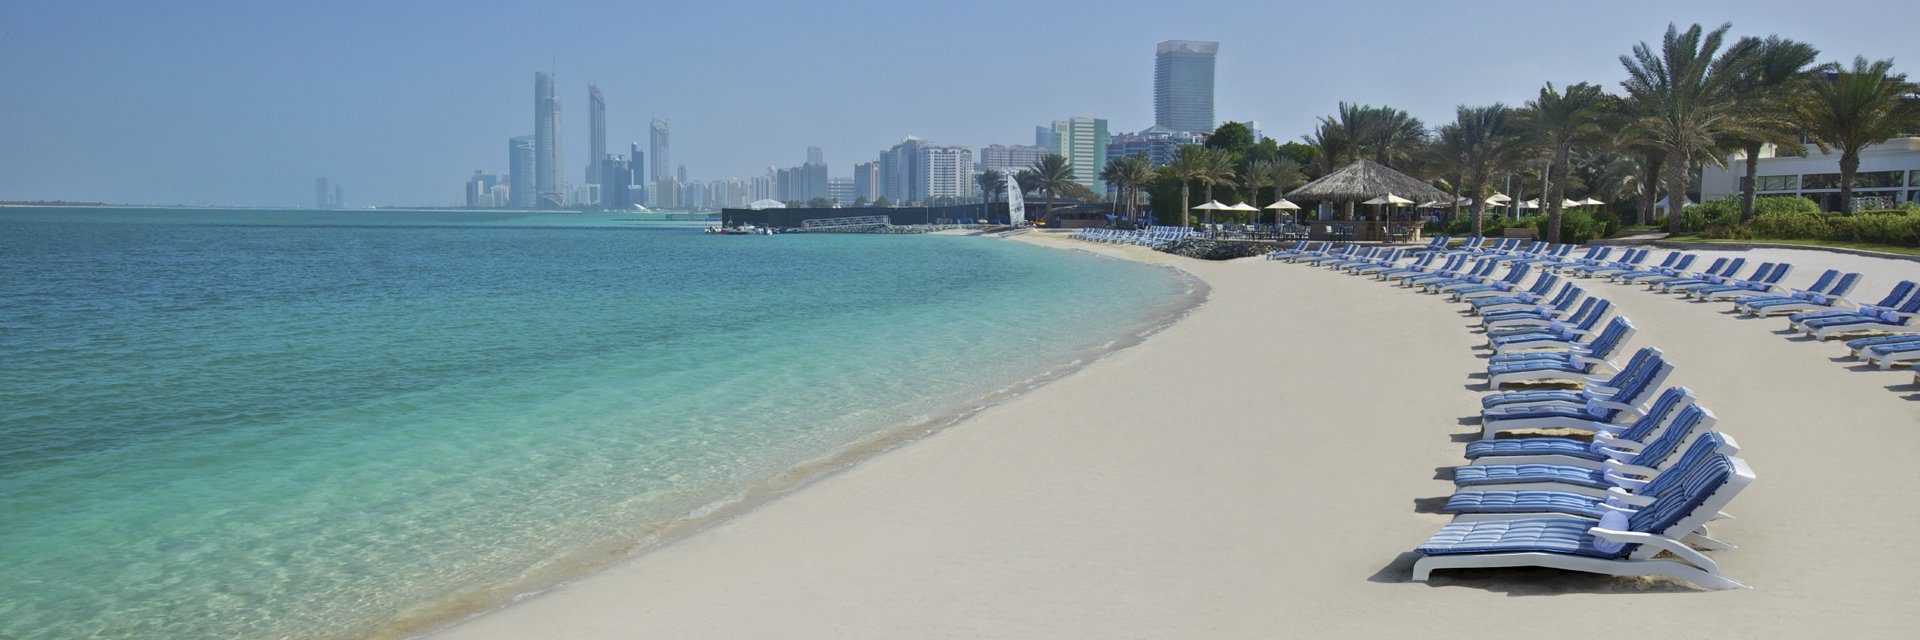 Dubai Marine Beach Resort & Spa 5* (Дубай, ОАЭ) - цены, отзывы, фото, бронирование - ПАКС